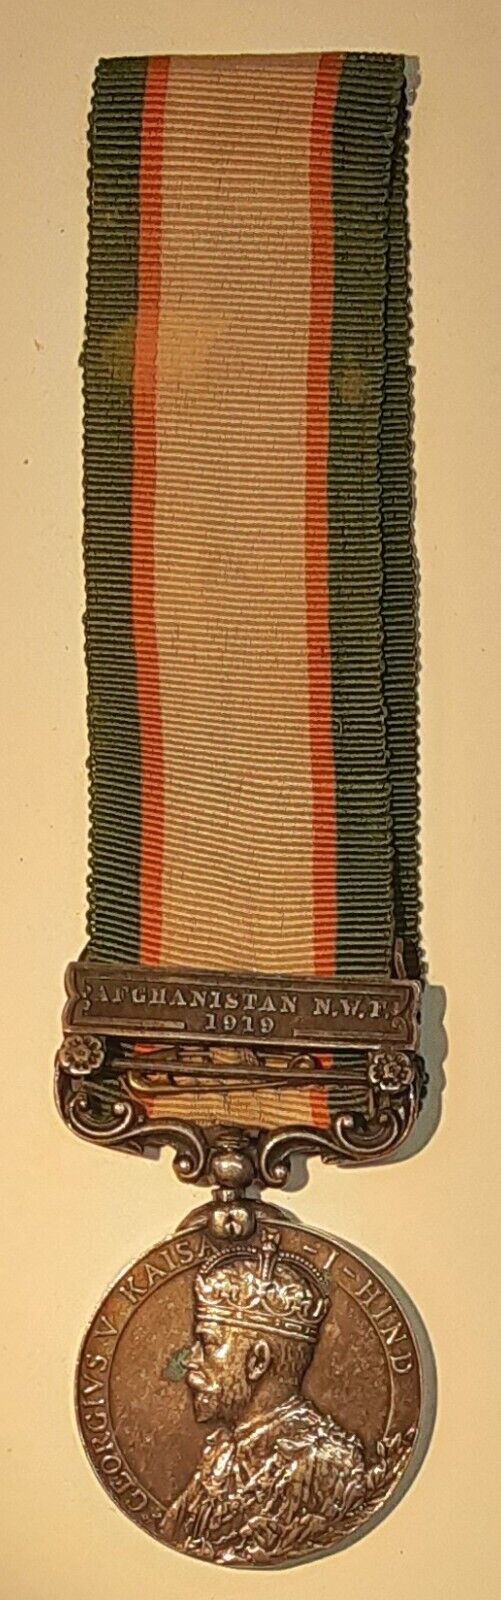 1919 British India General Service Medal Afghanistan NWF 1919--See Photos